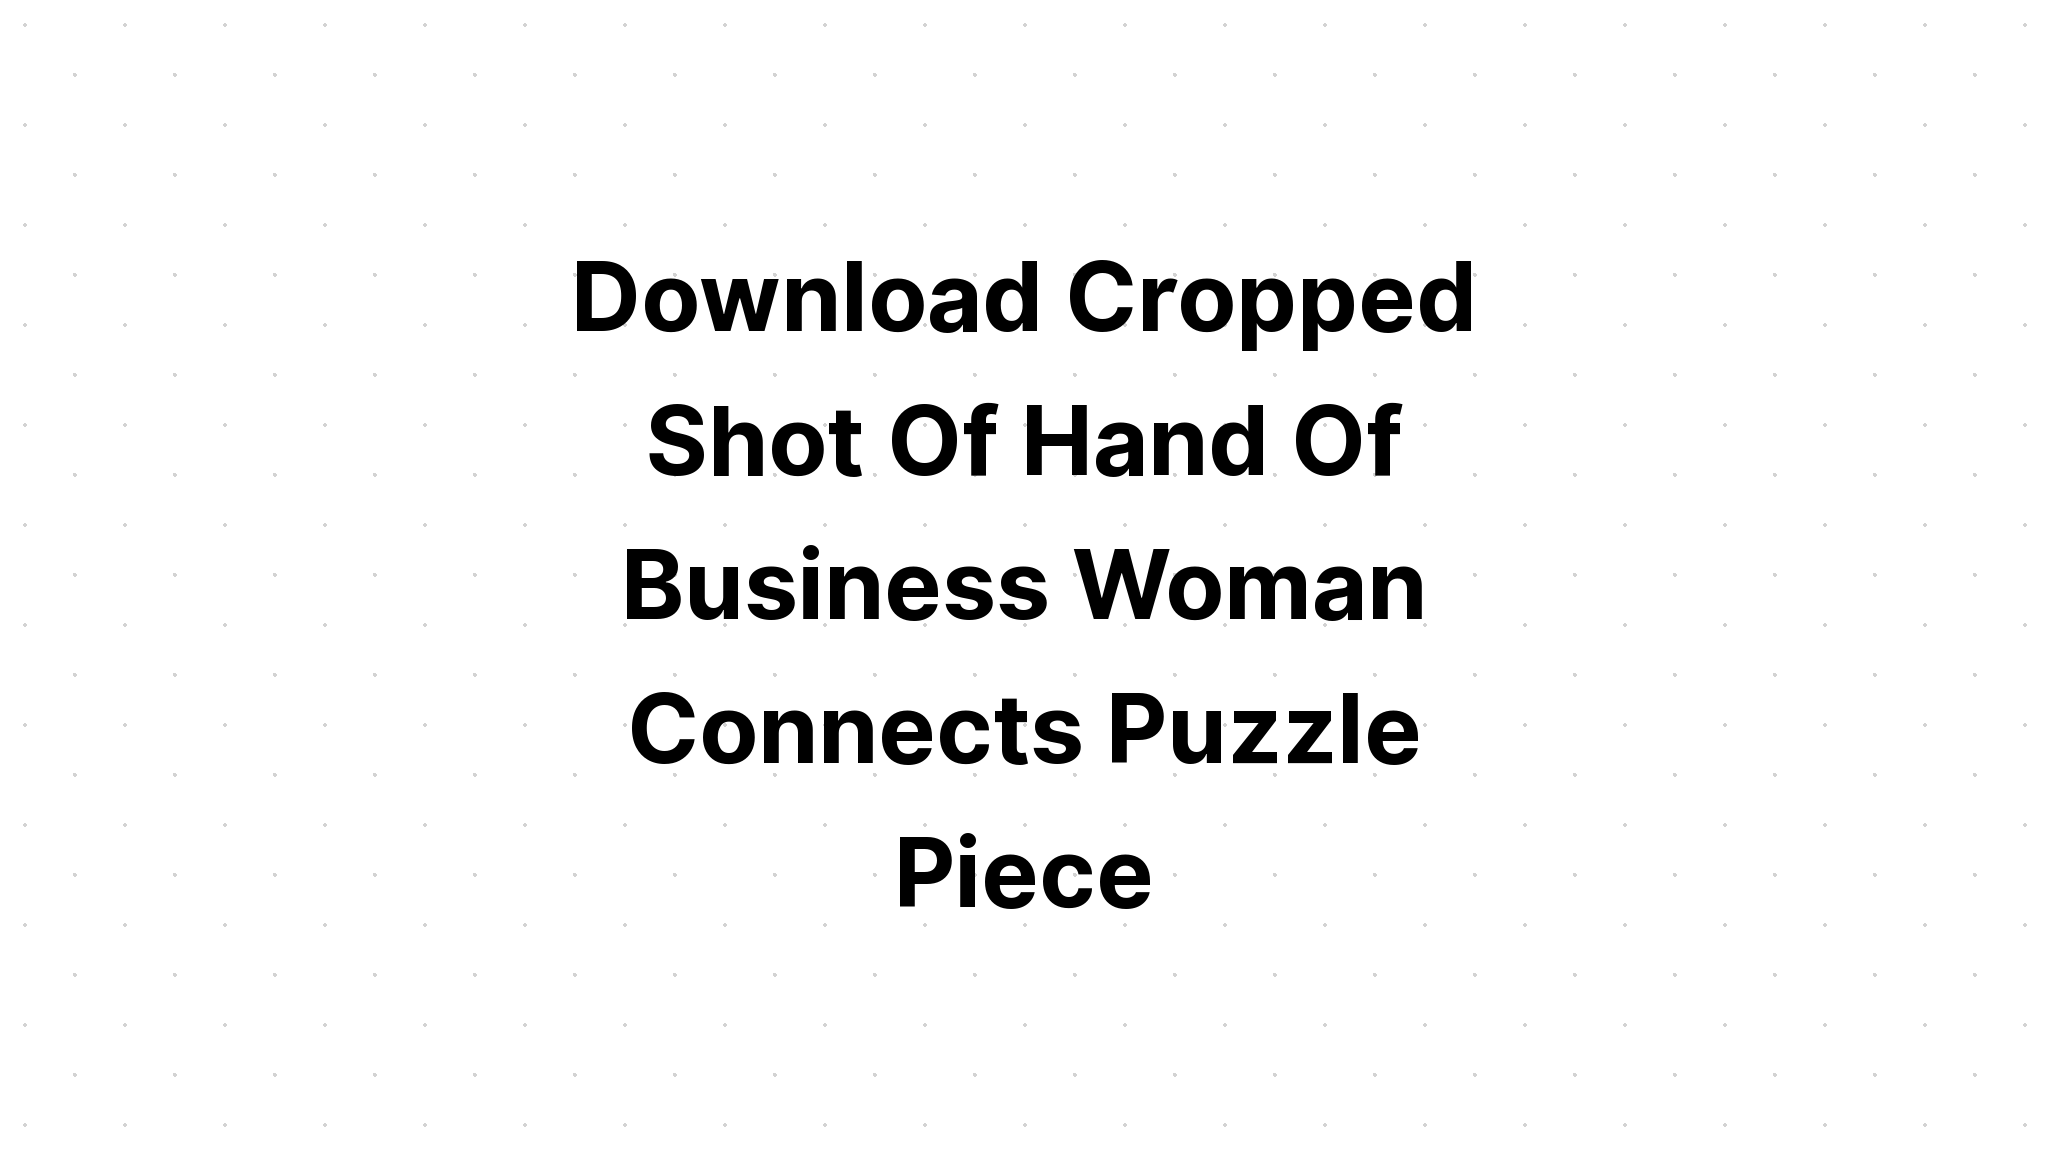 Download Puzzle SVG File